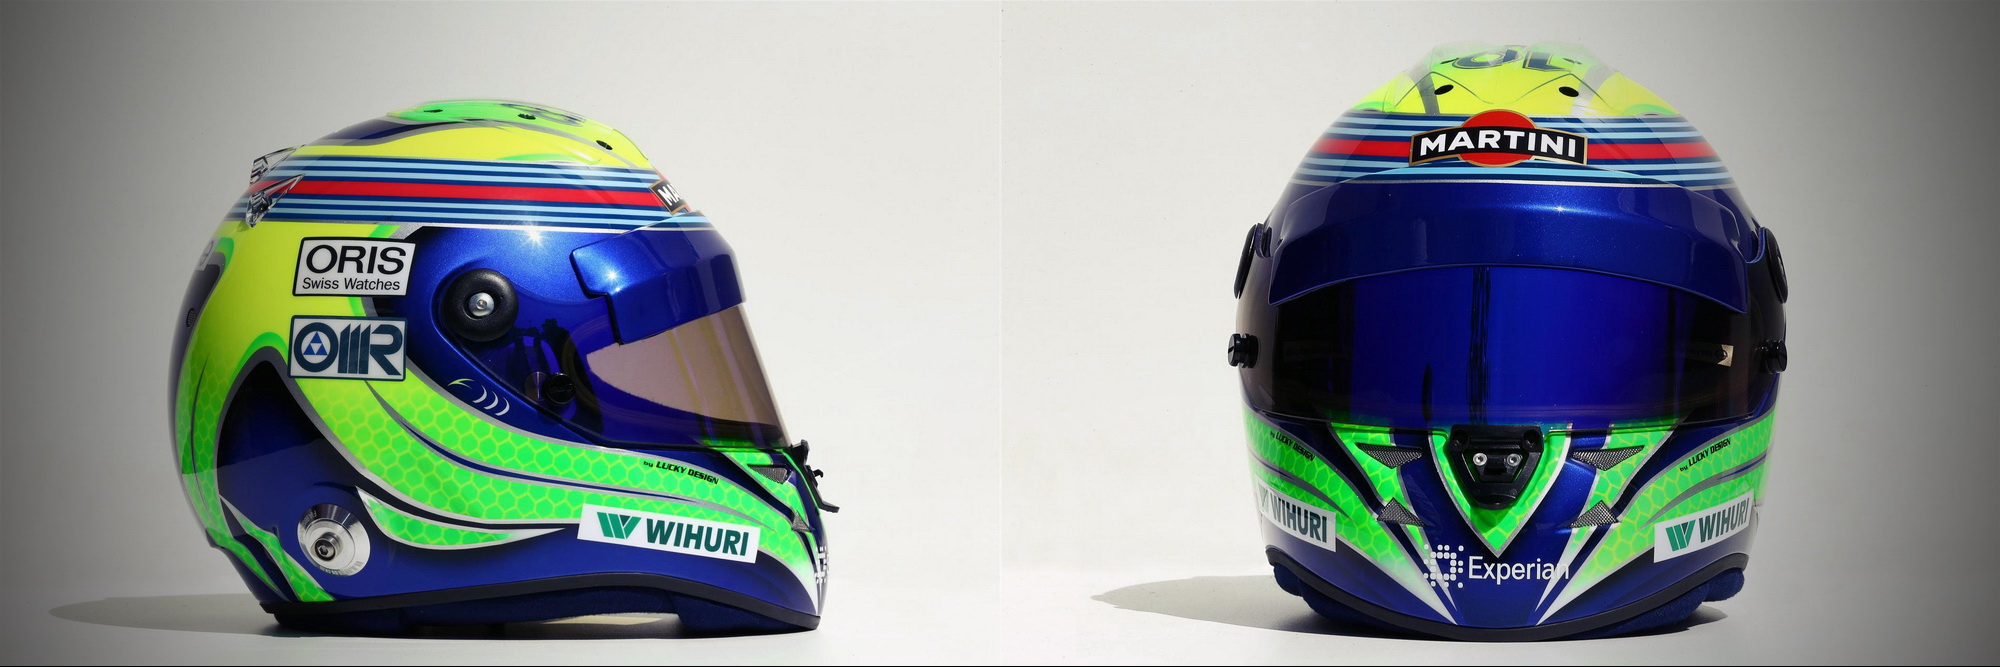 Шлем Фелипе Массы на сезон 2014 года | 2014 helmet of Felipe Massa